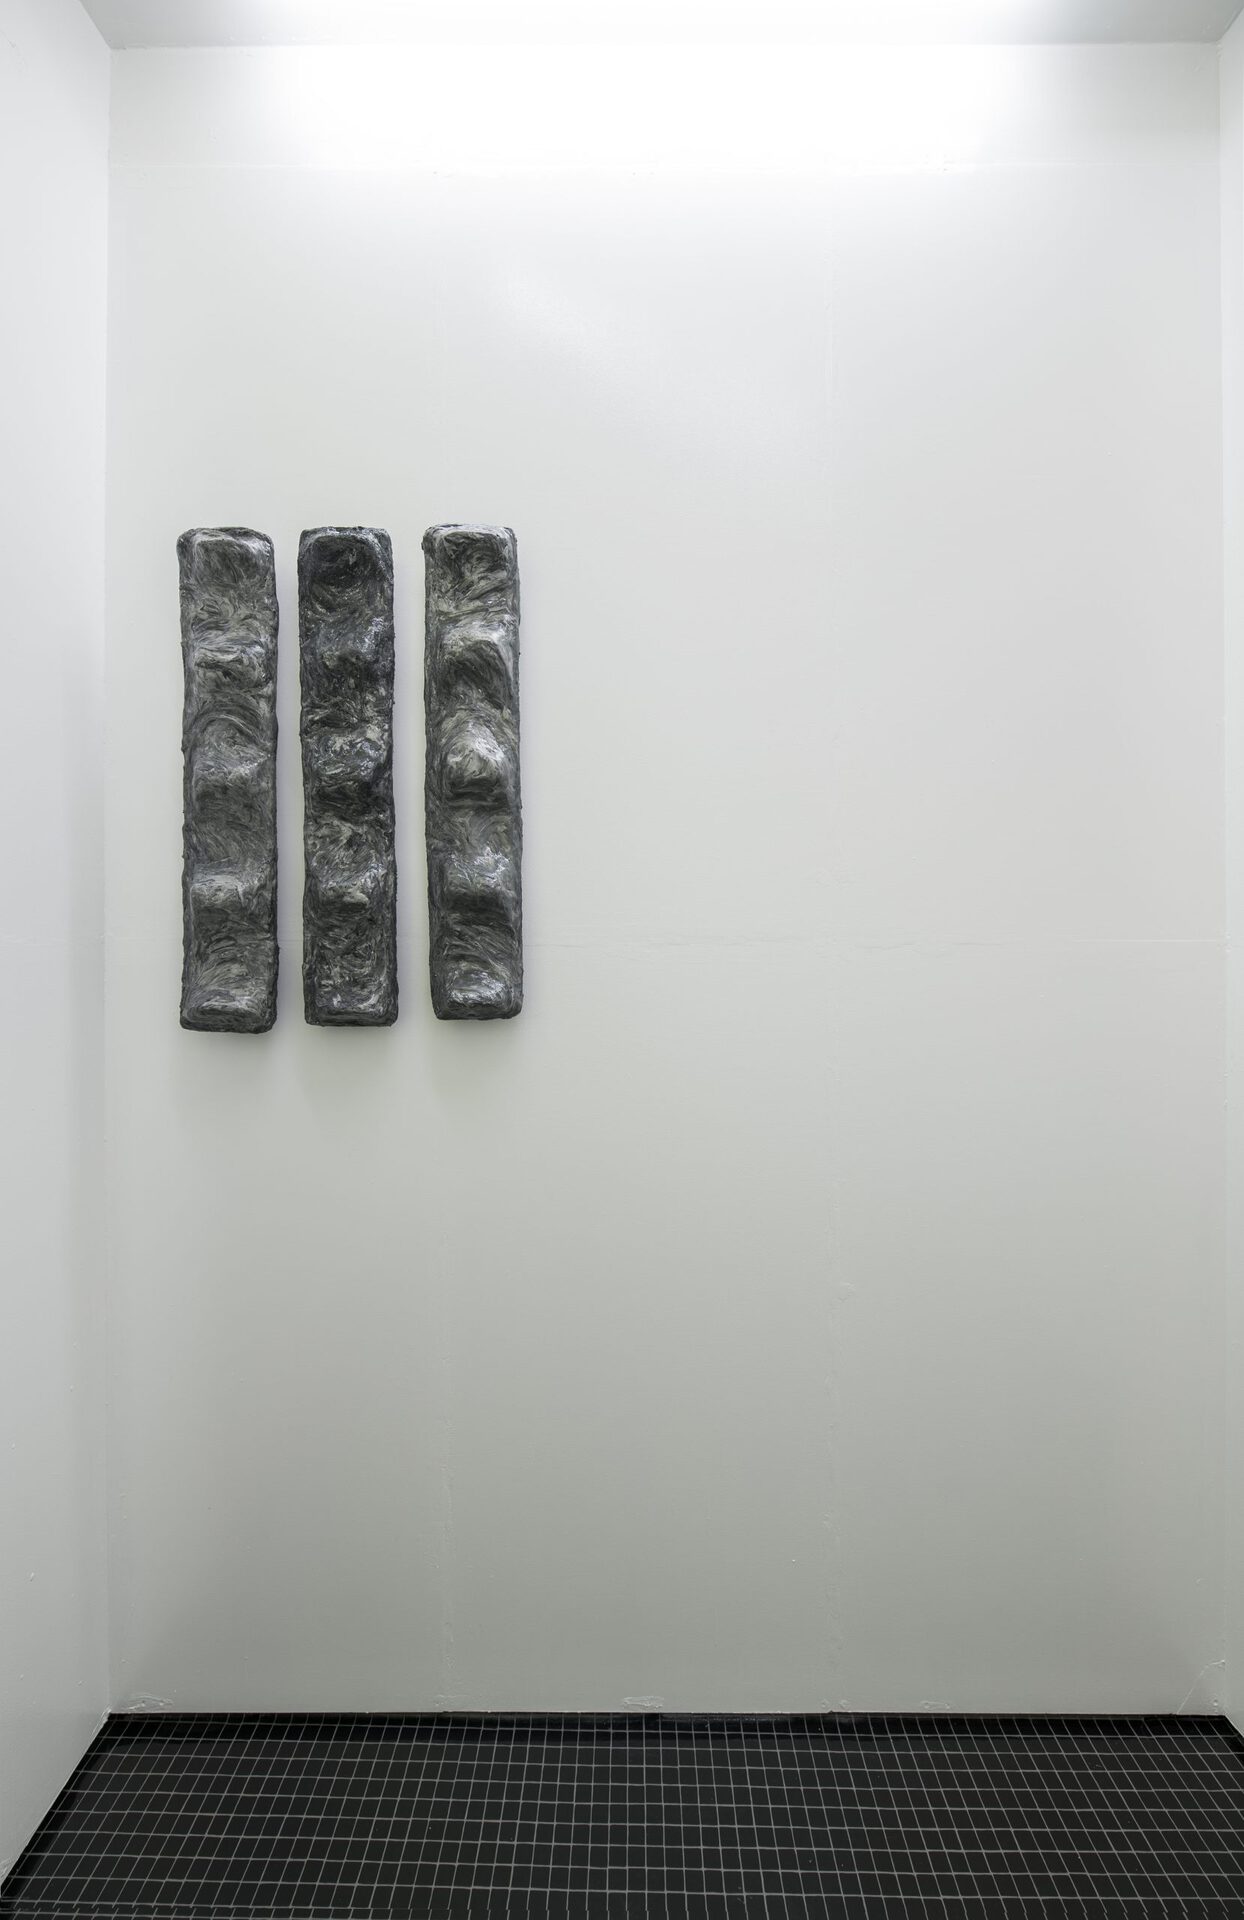 Pauline, Cordier, Tamis Misat # 2, silicon and non-slip cover, 74x51x9cm (29.2x20x3.5 inches), 2020